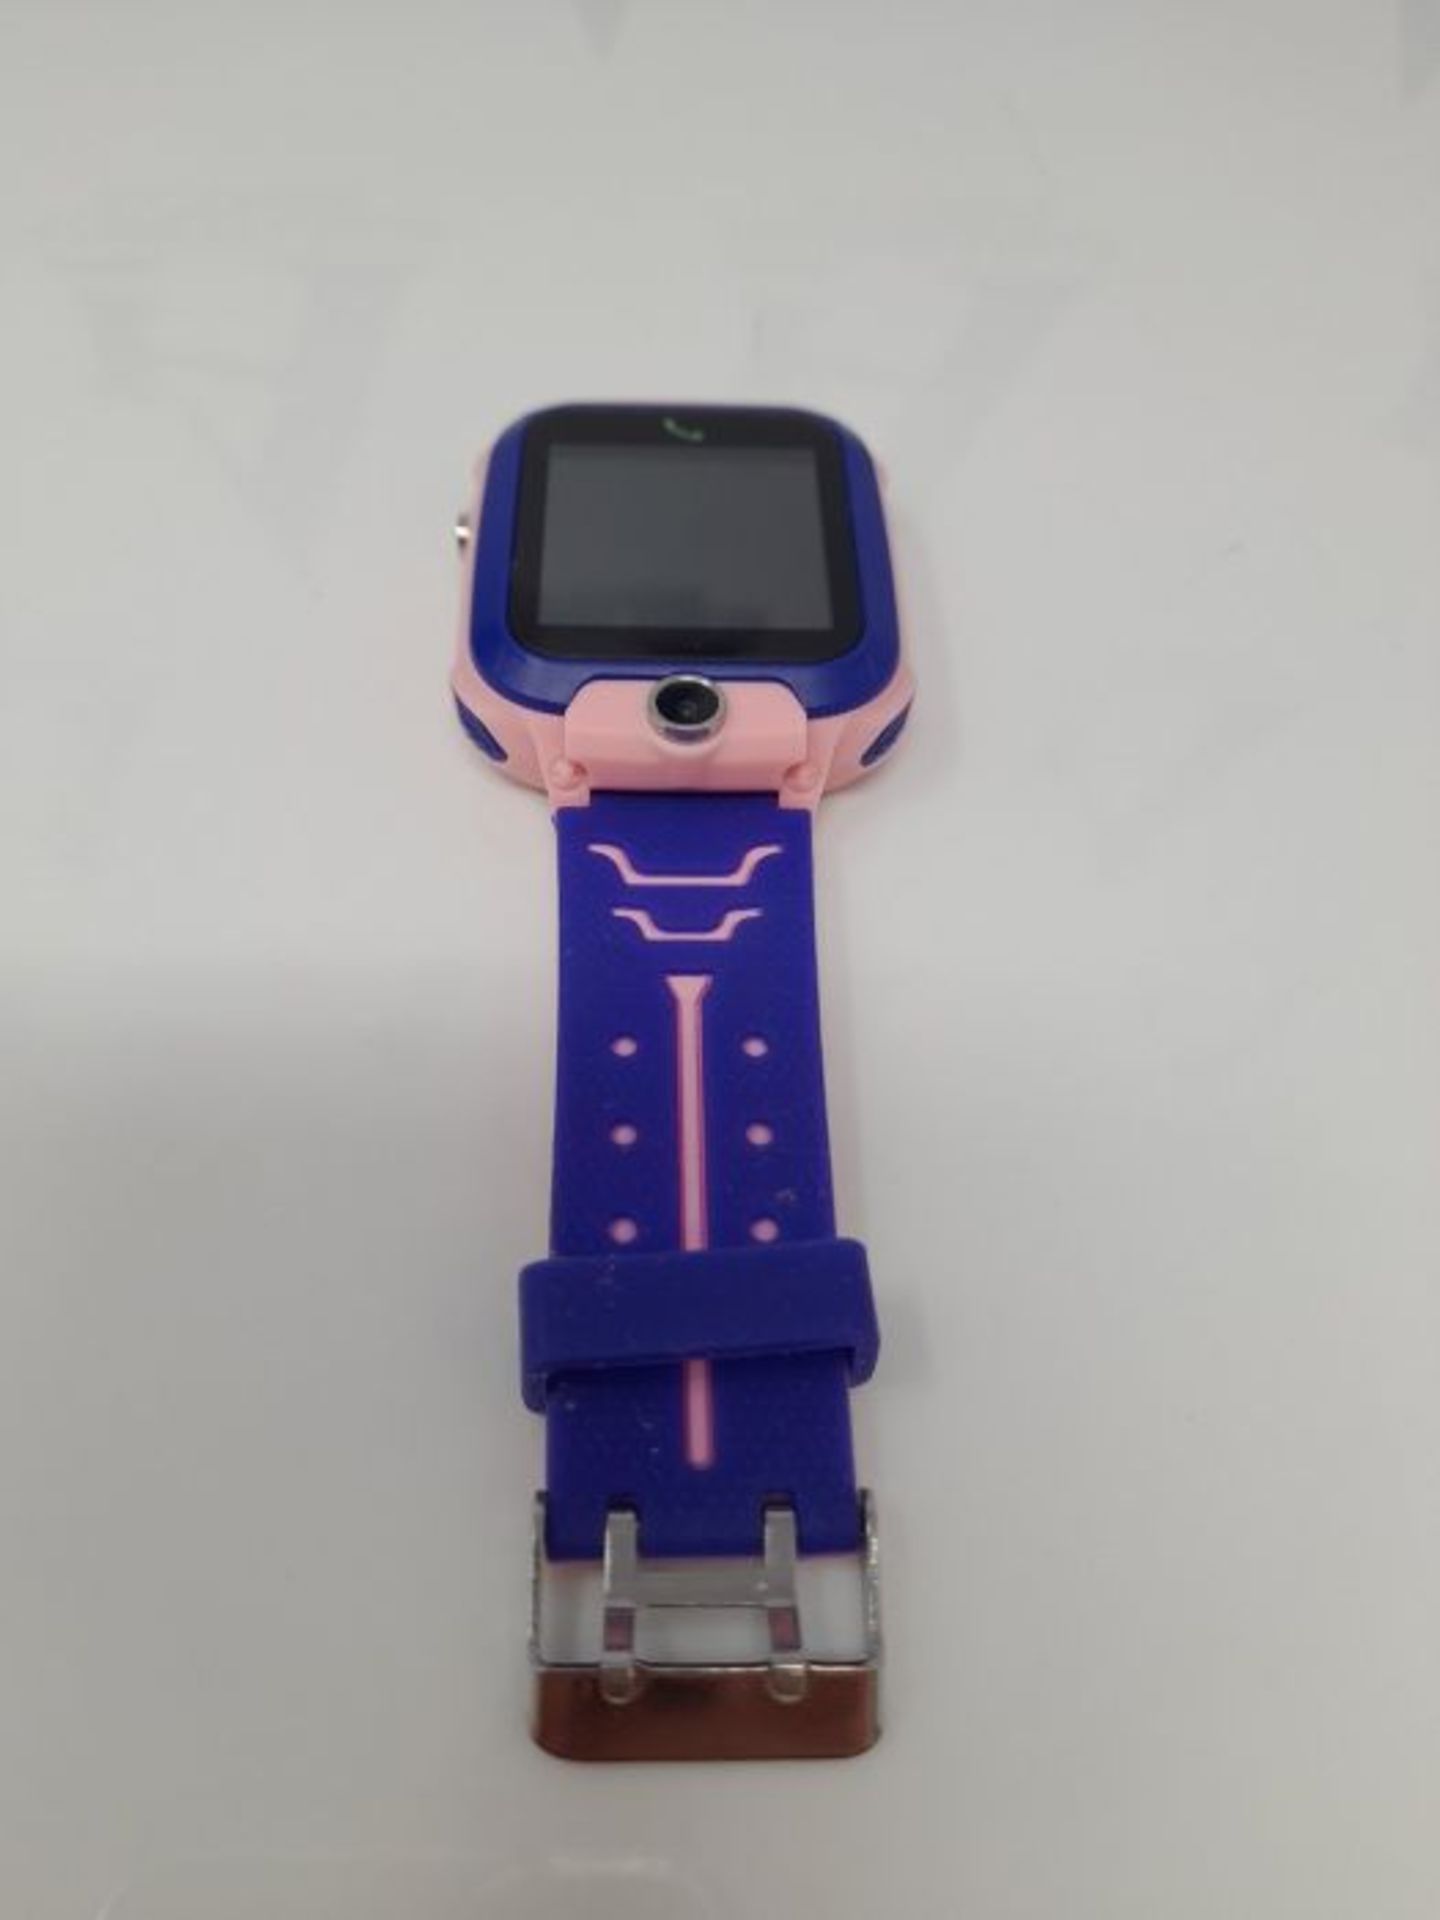 [INCOMPLETE] Children's Intelligent Watch Waterproof Smartwatch LBS Tracker with Child - Image 2 of 2